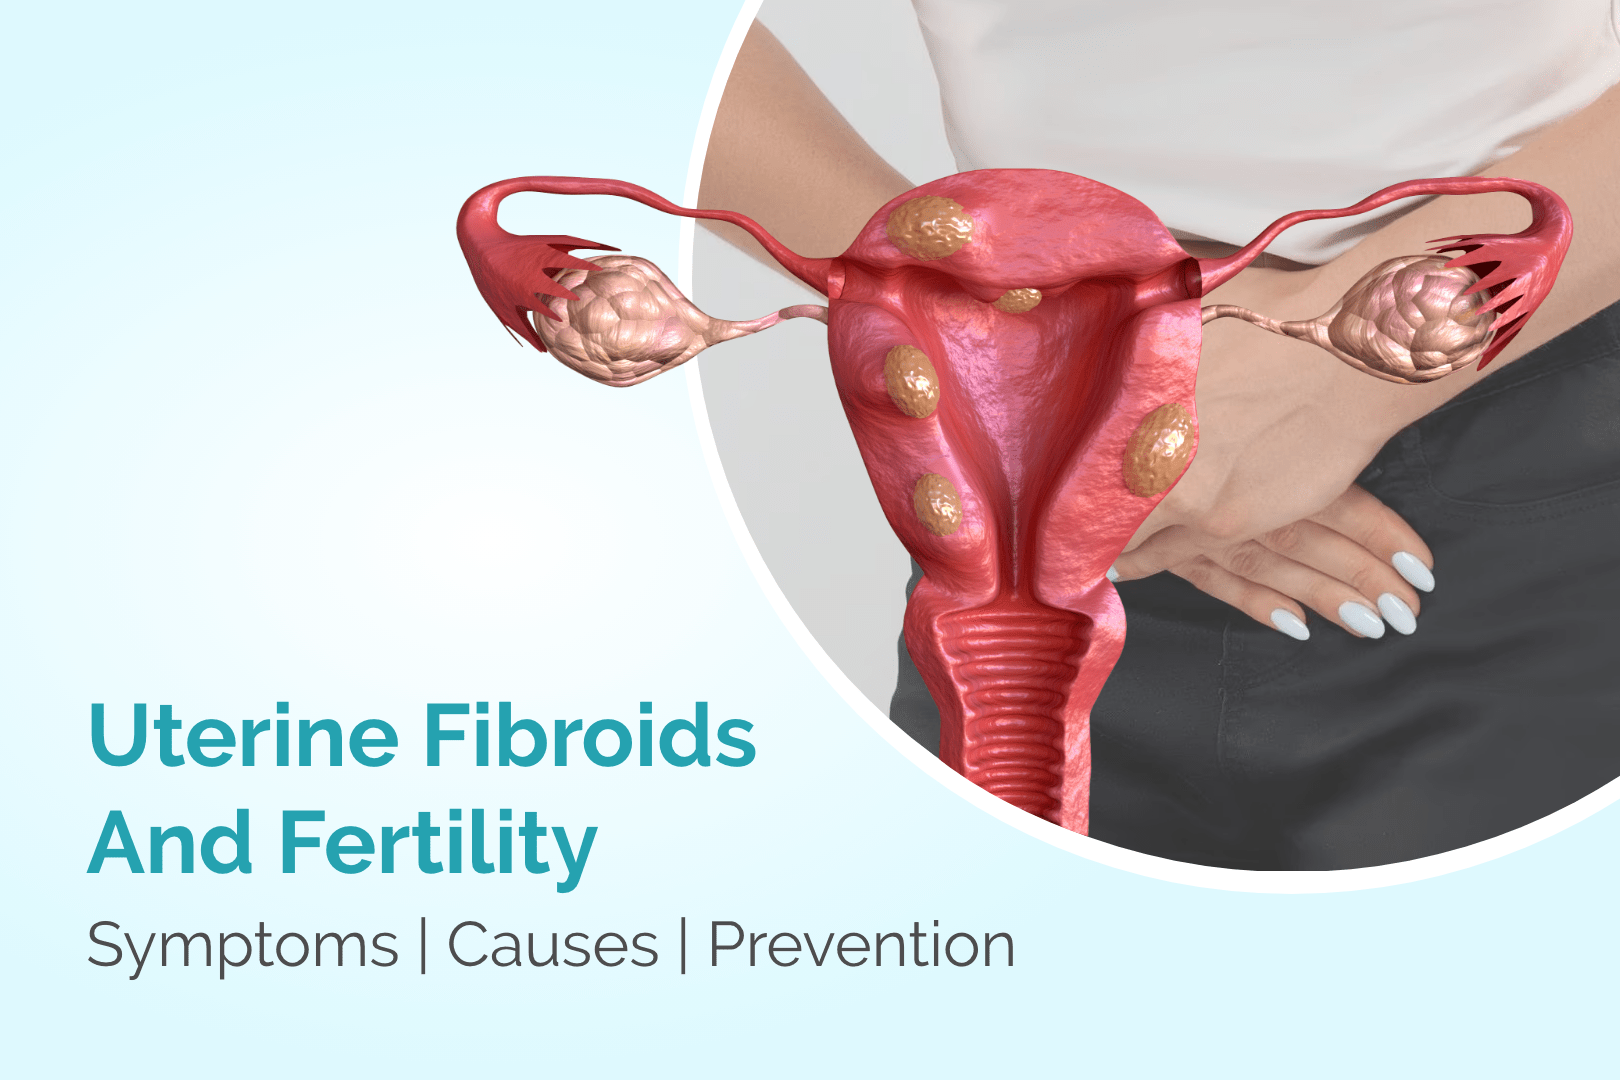 Uterine Fibroids And Fertility: Symptoms, Causes, Prevention